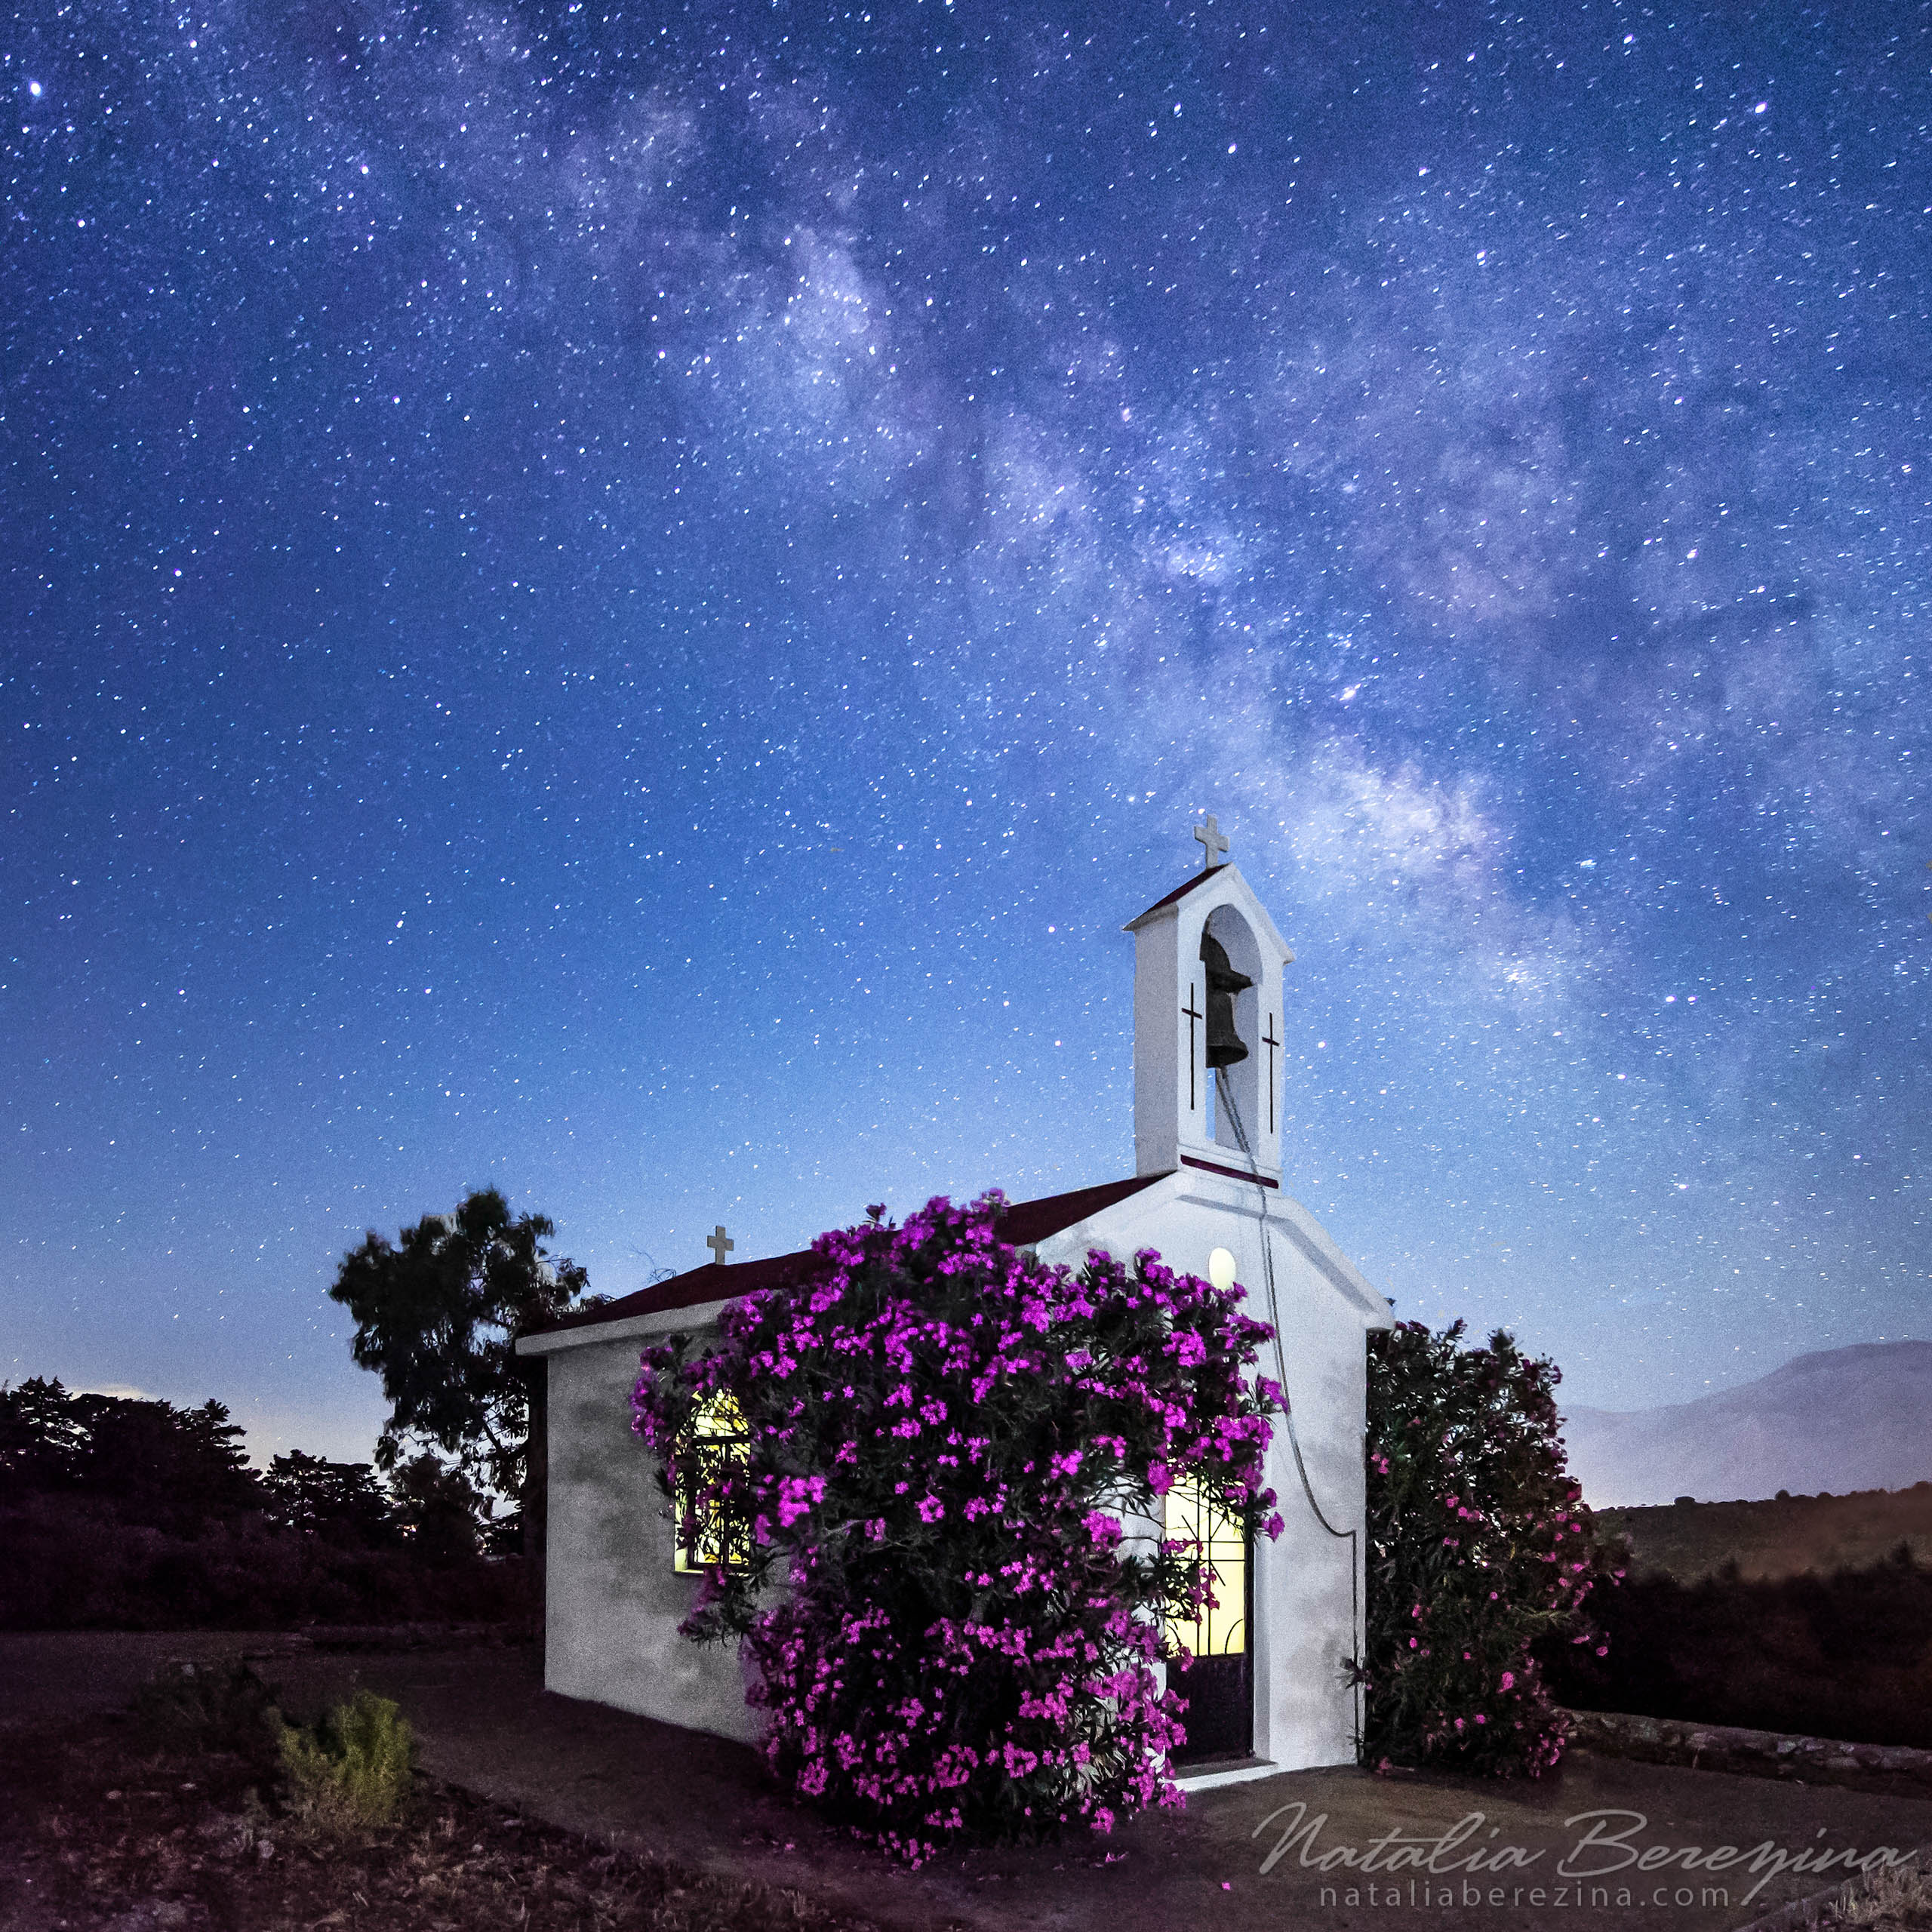 Greece, Crete, night time, star sky, Milky Way, church, 1x1 CR1-NBDK1U8349 - Crete, Greece - Natalia Berezina Photography